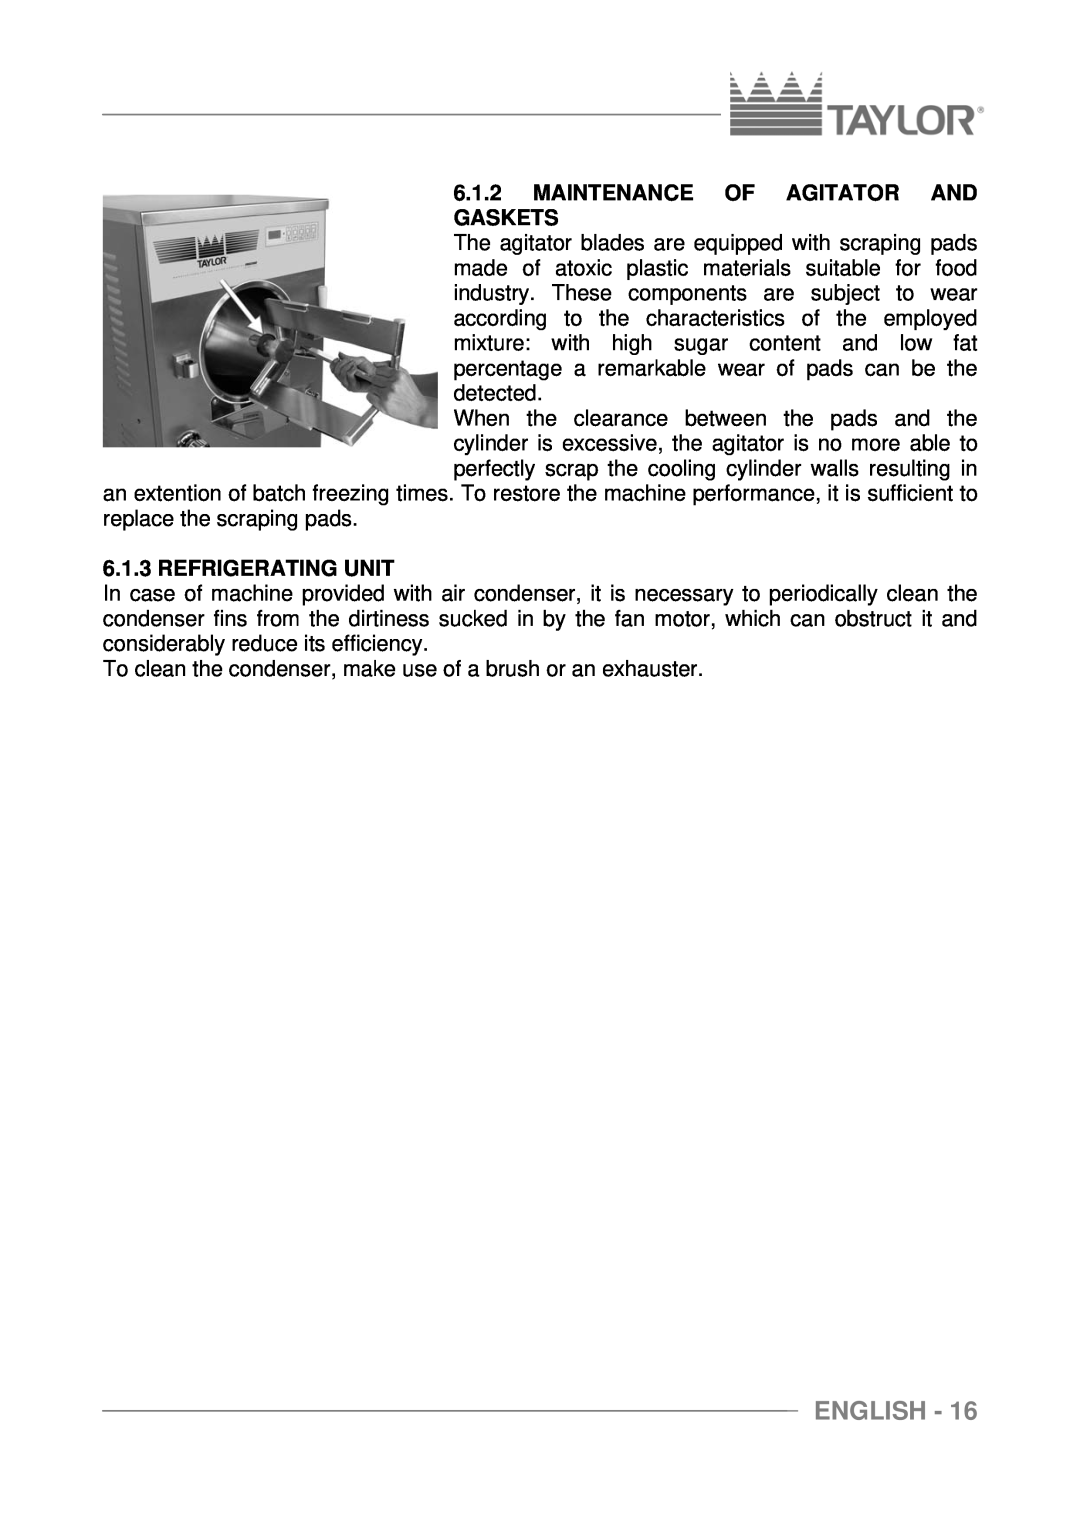 Taylor C116, C117, C118 manuel dutilisation 6.1.2MAINTENANCE OF AGITATOR AND GASKETS, Refrigerating Unit, English 